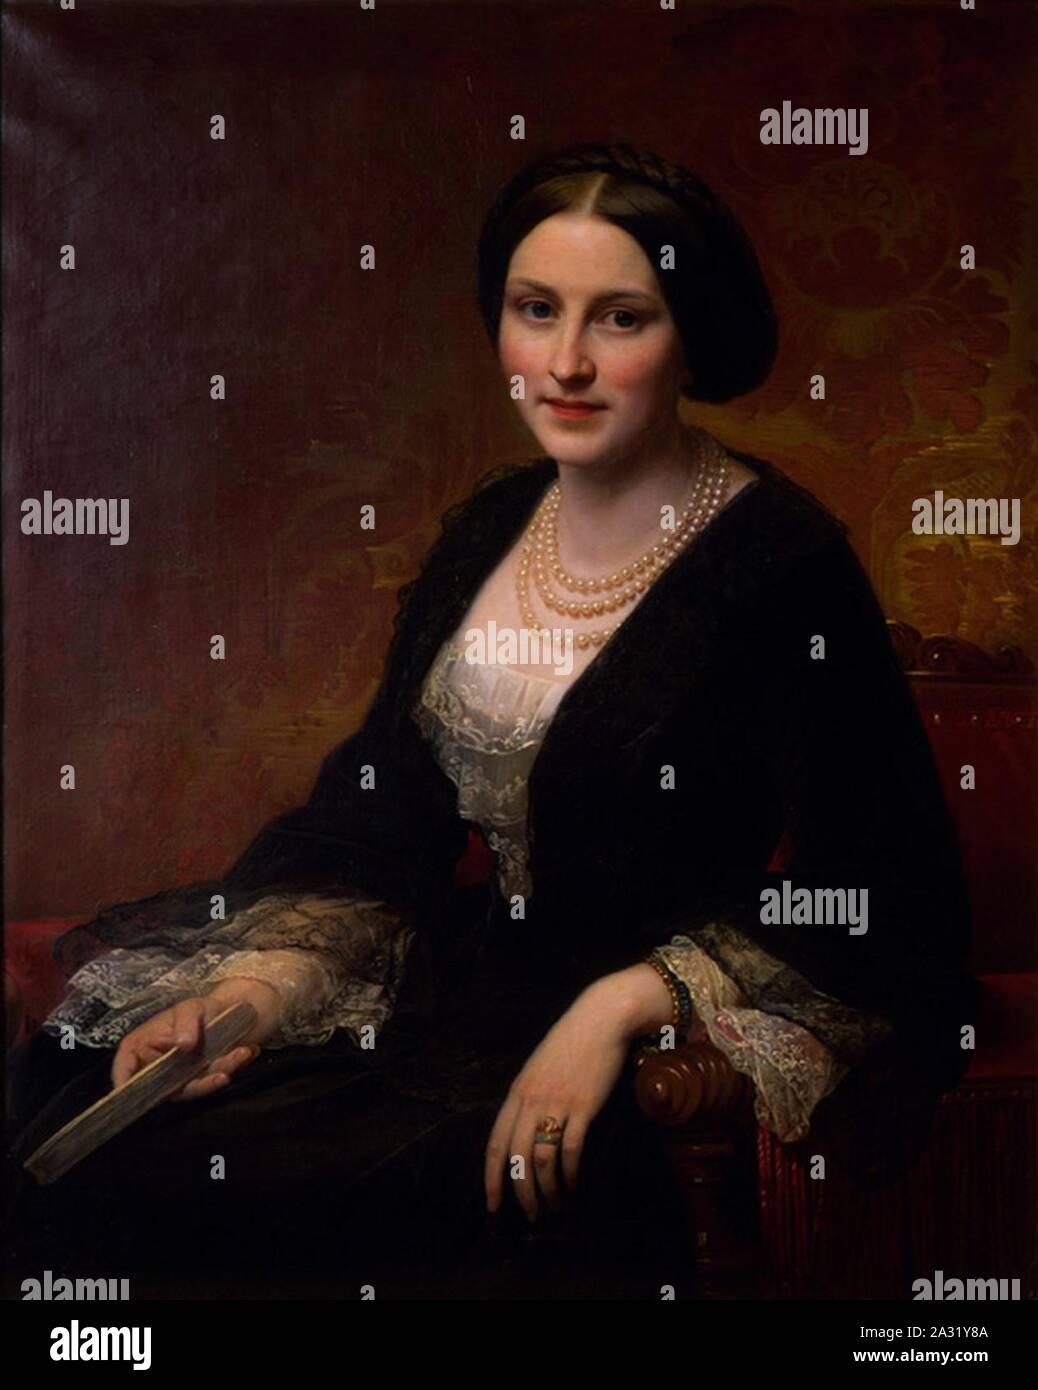 Erwine-Sophie Tascher de la Pagerie (1822-1890), comtesse de Waldner. Stock Photo